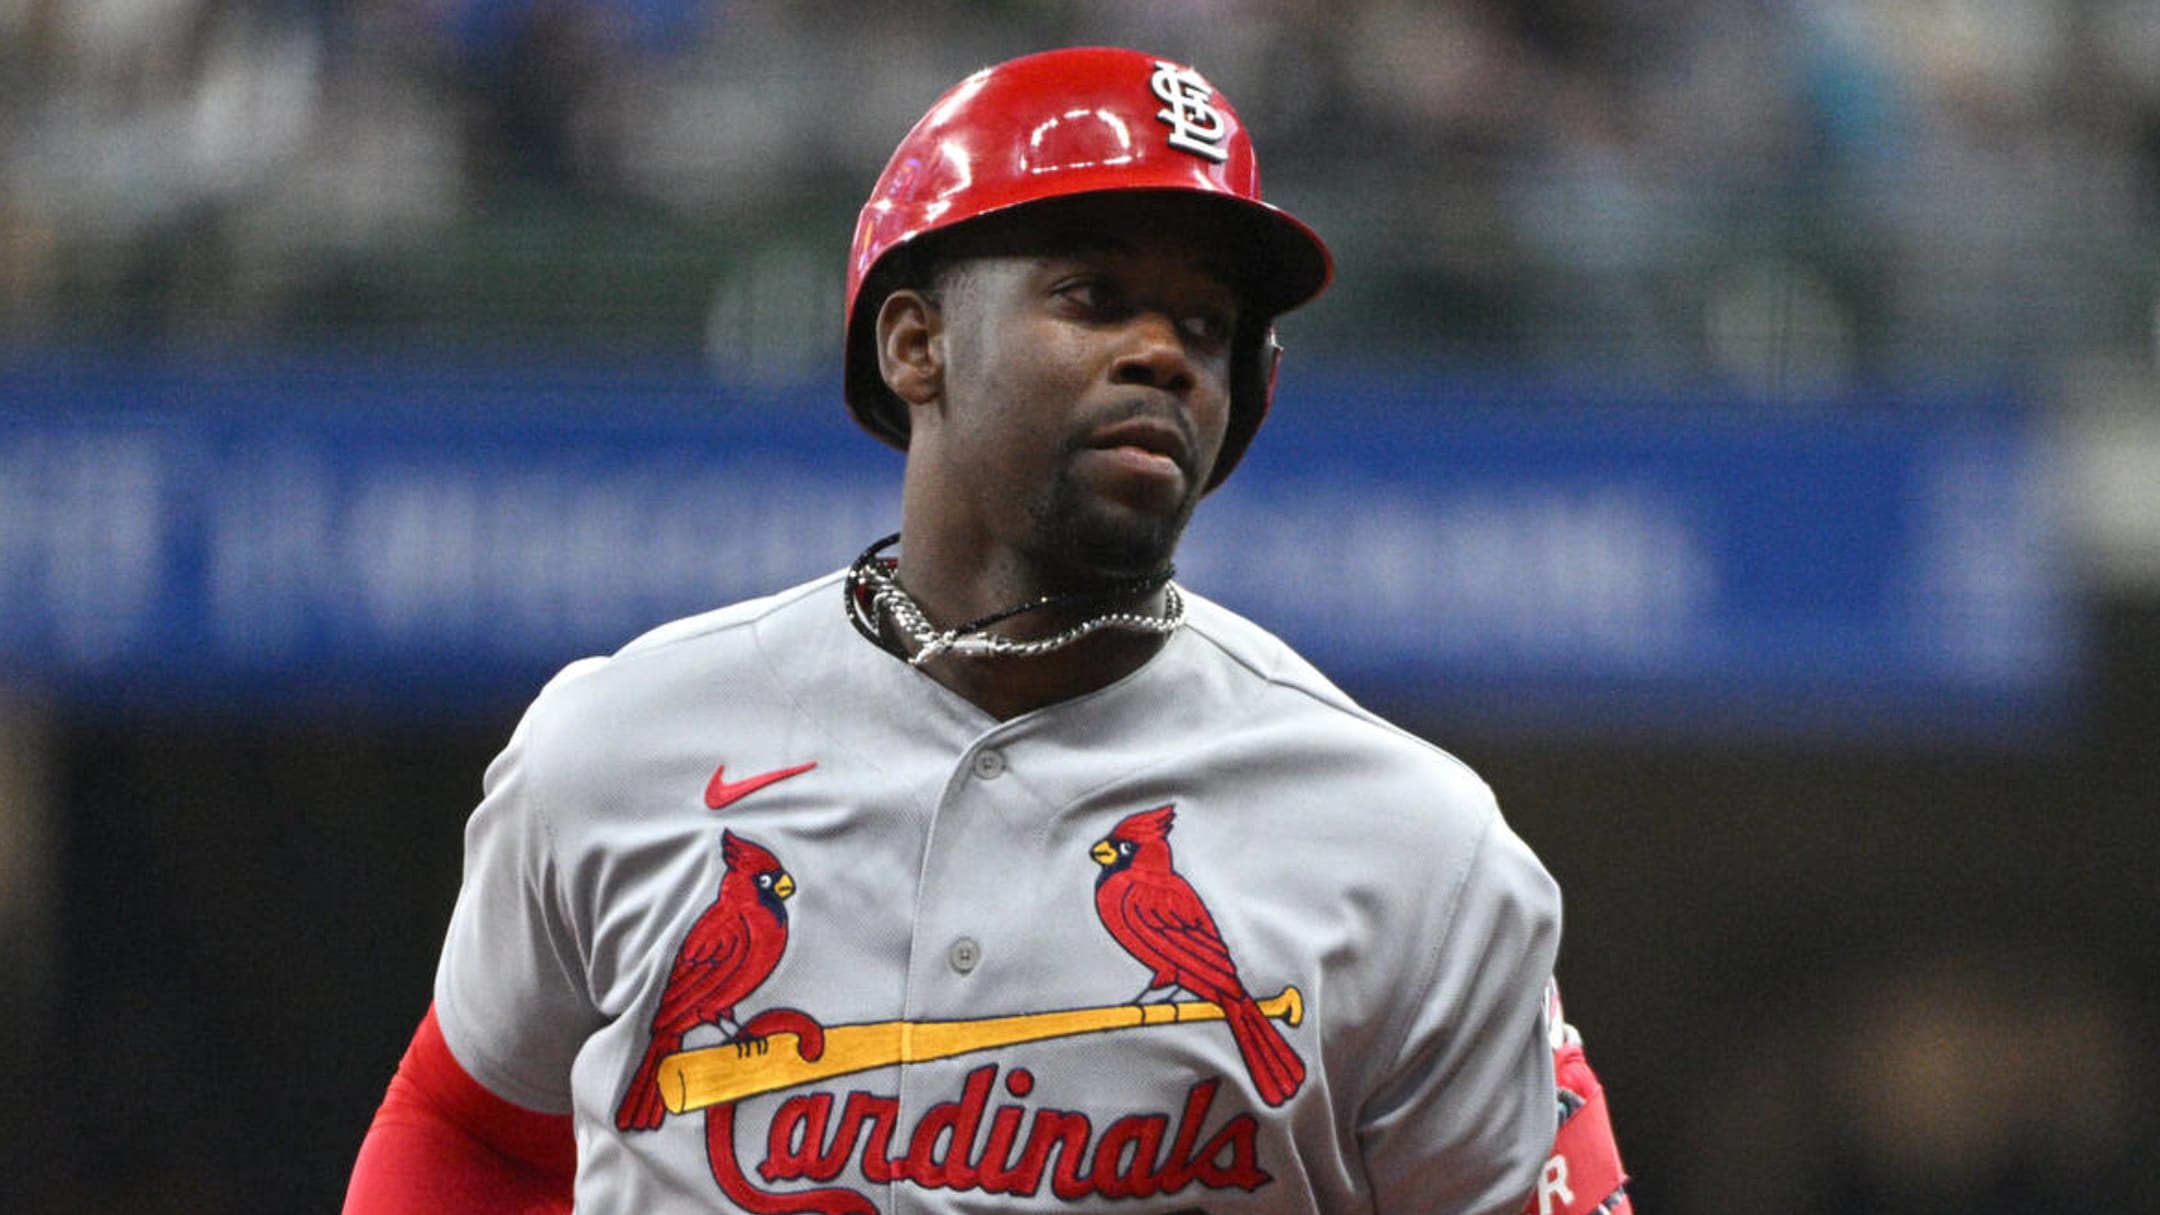 Cardinals recalling top prospect Walker to major league roster